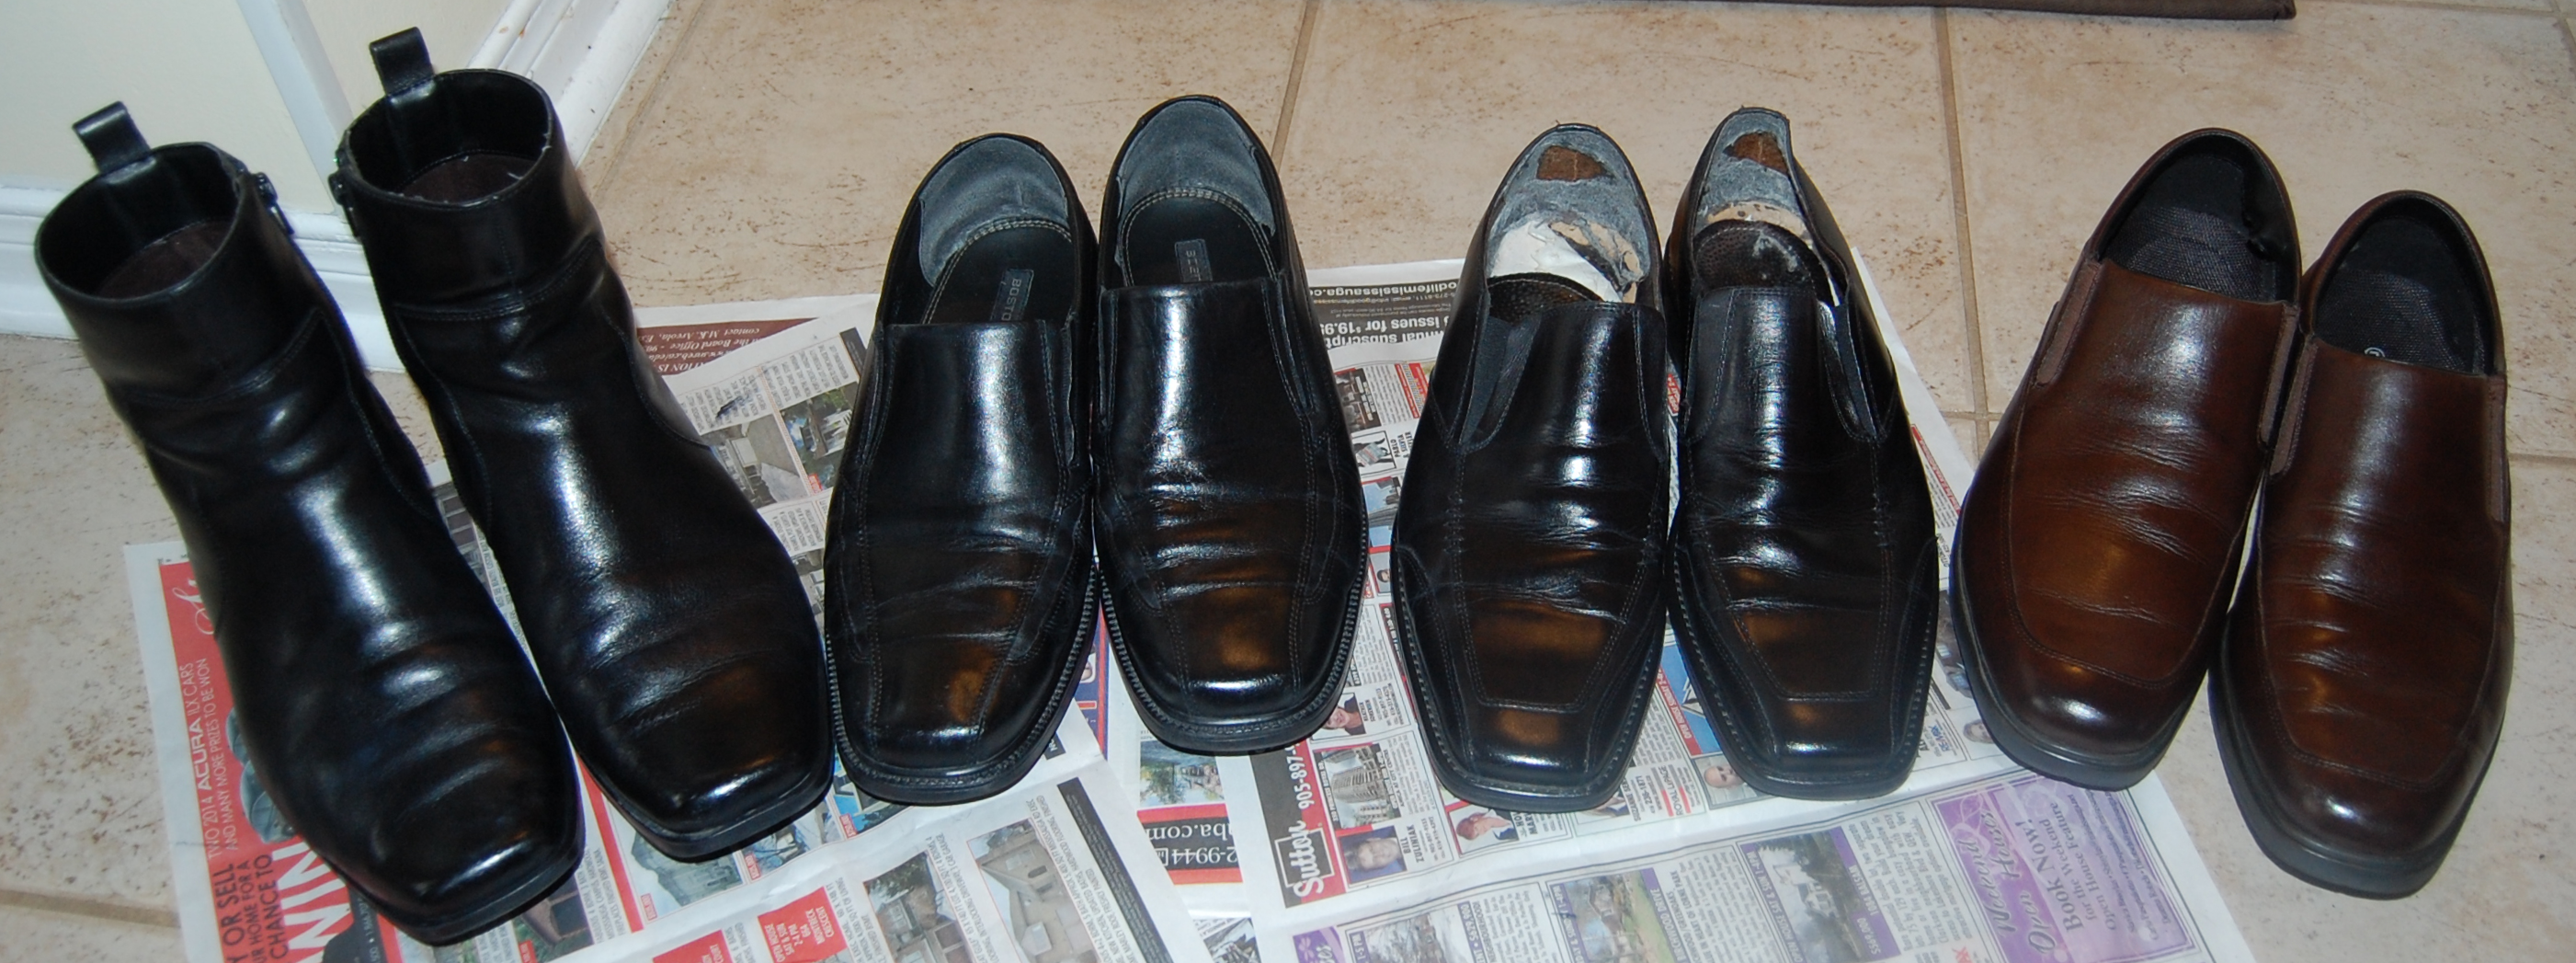 shiniest shoe polish